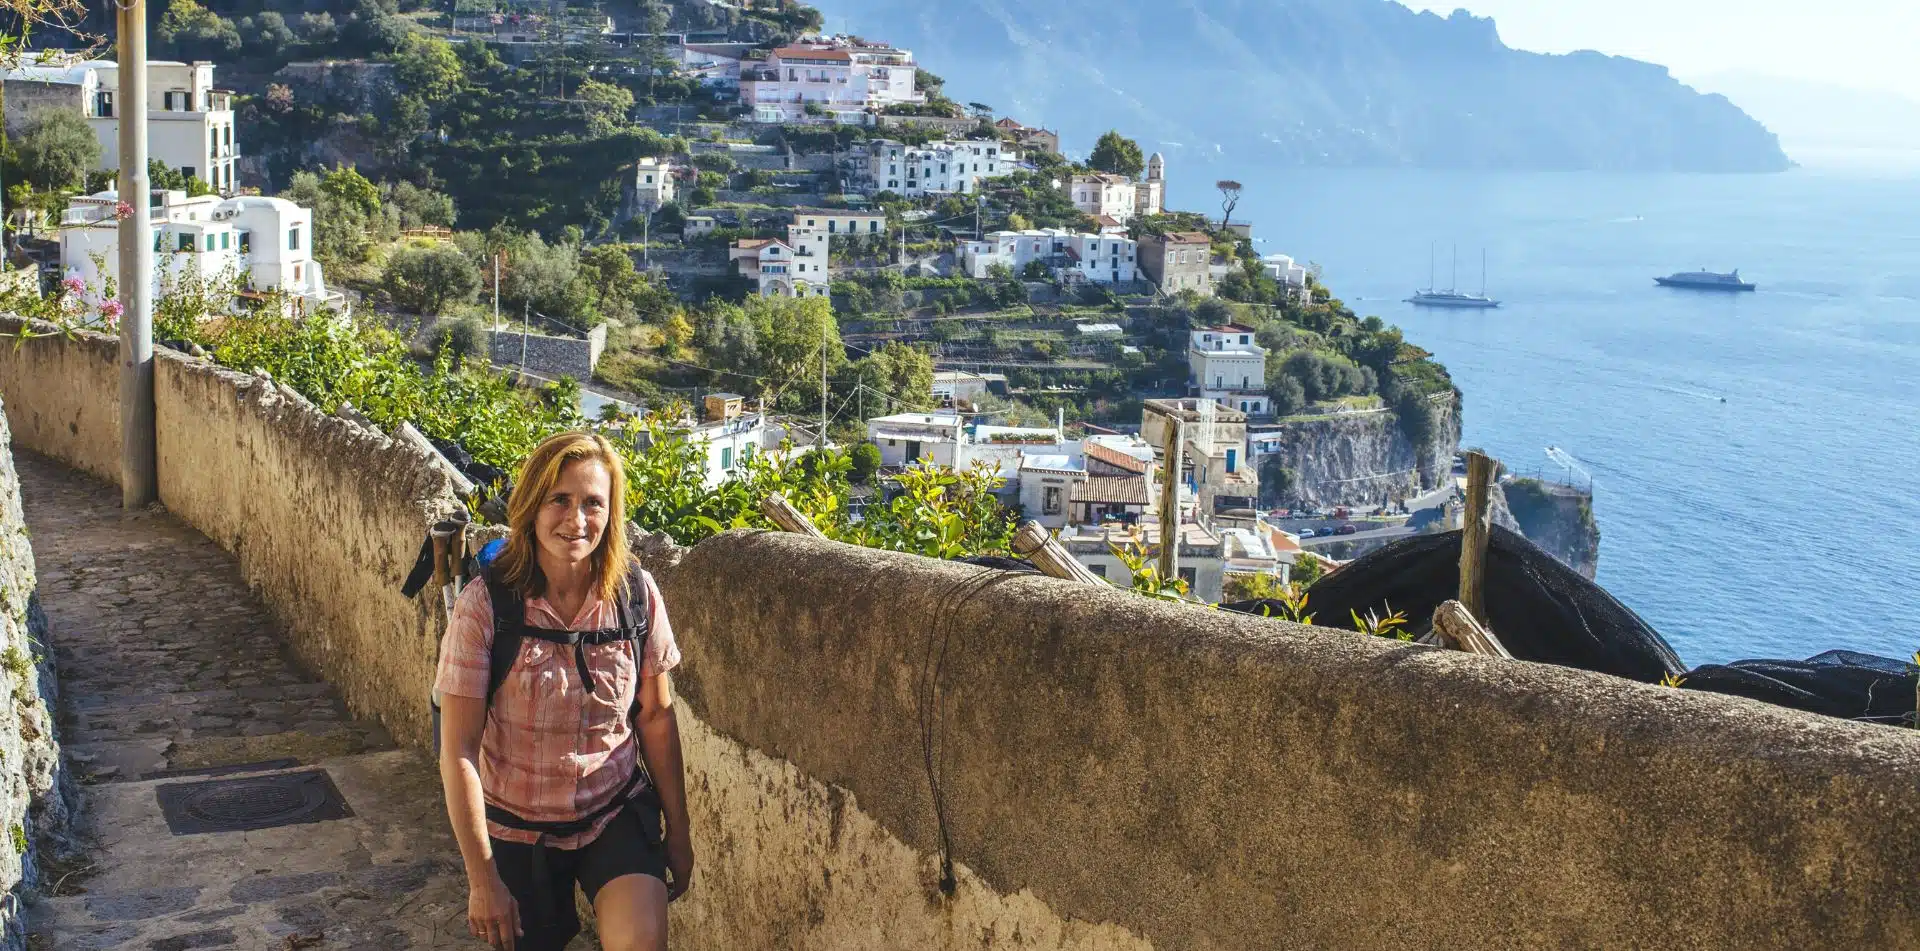 Traveler walking along the Amalfi Coast in Italy